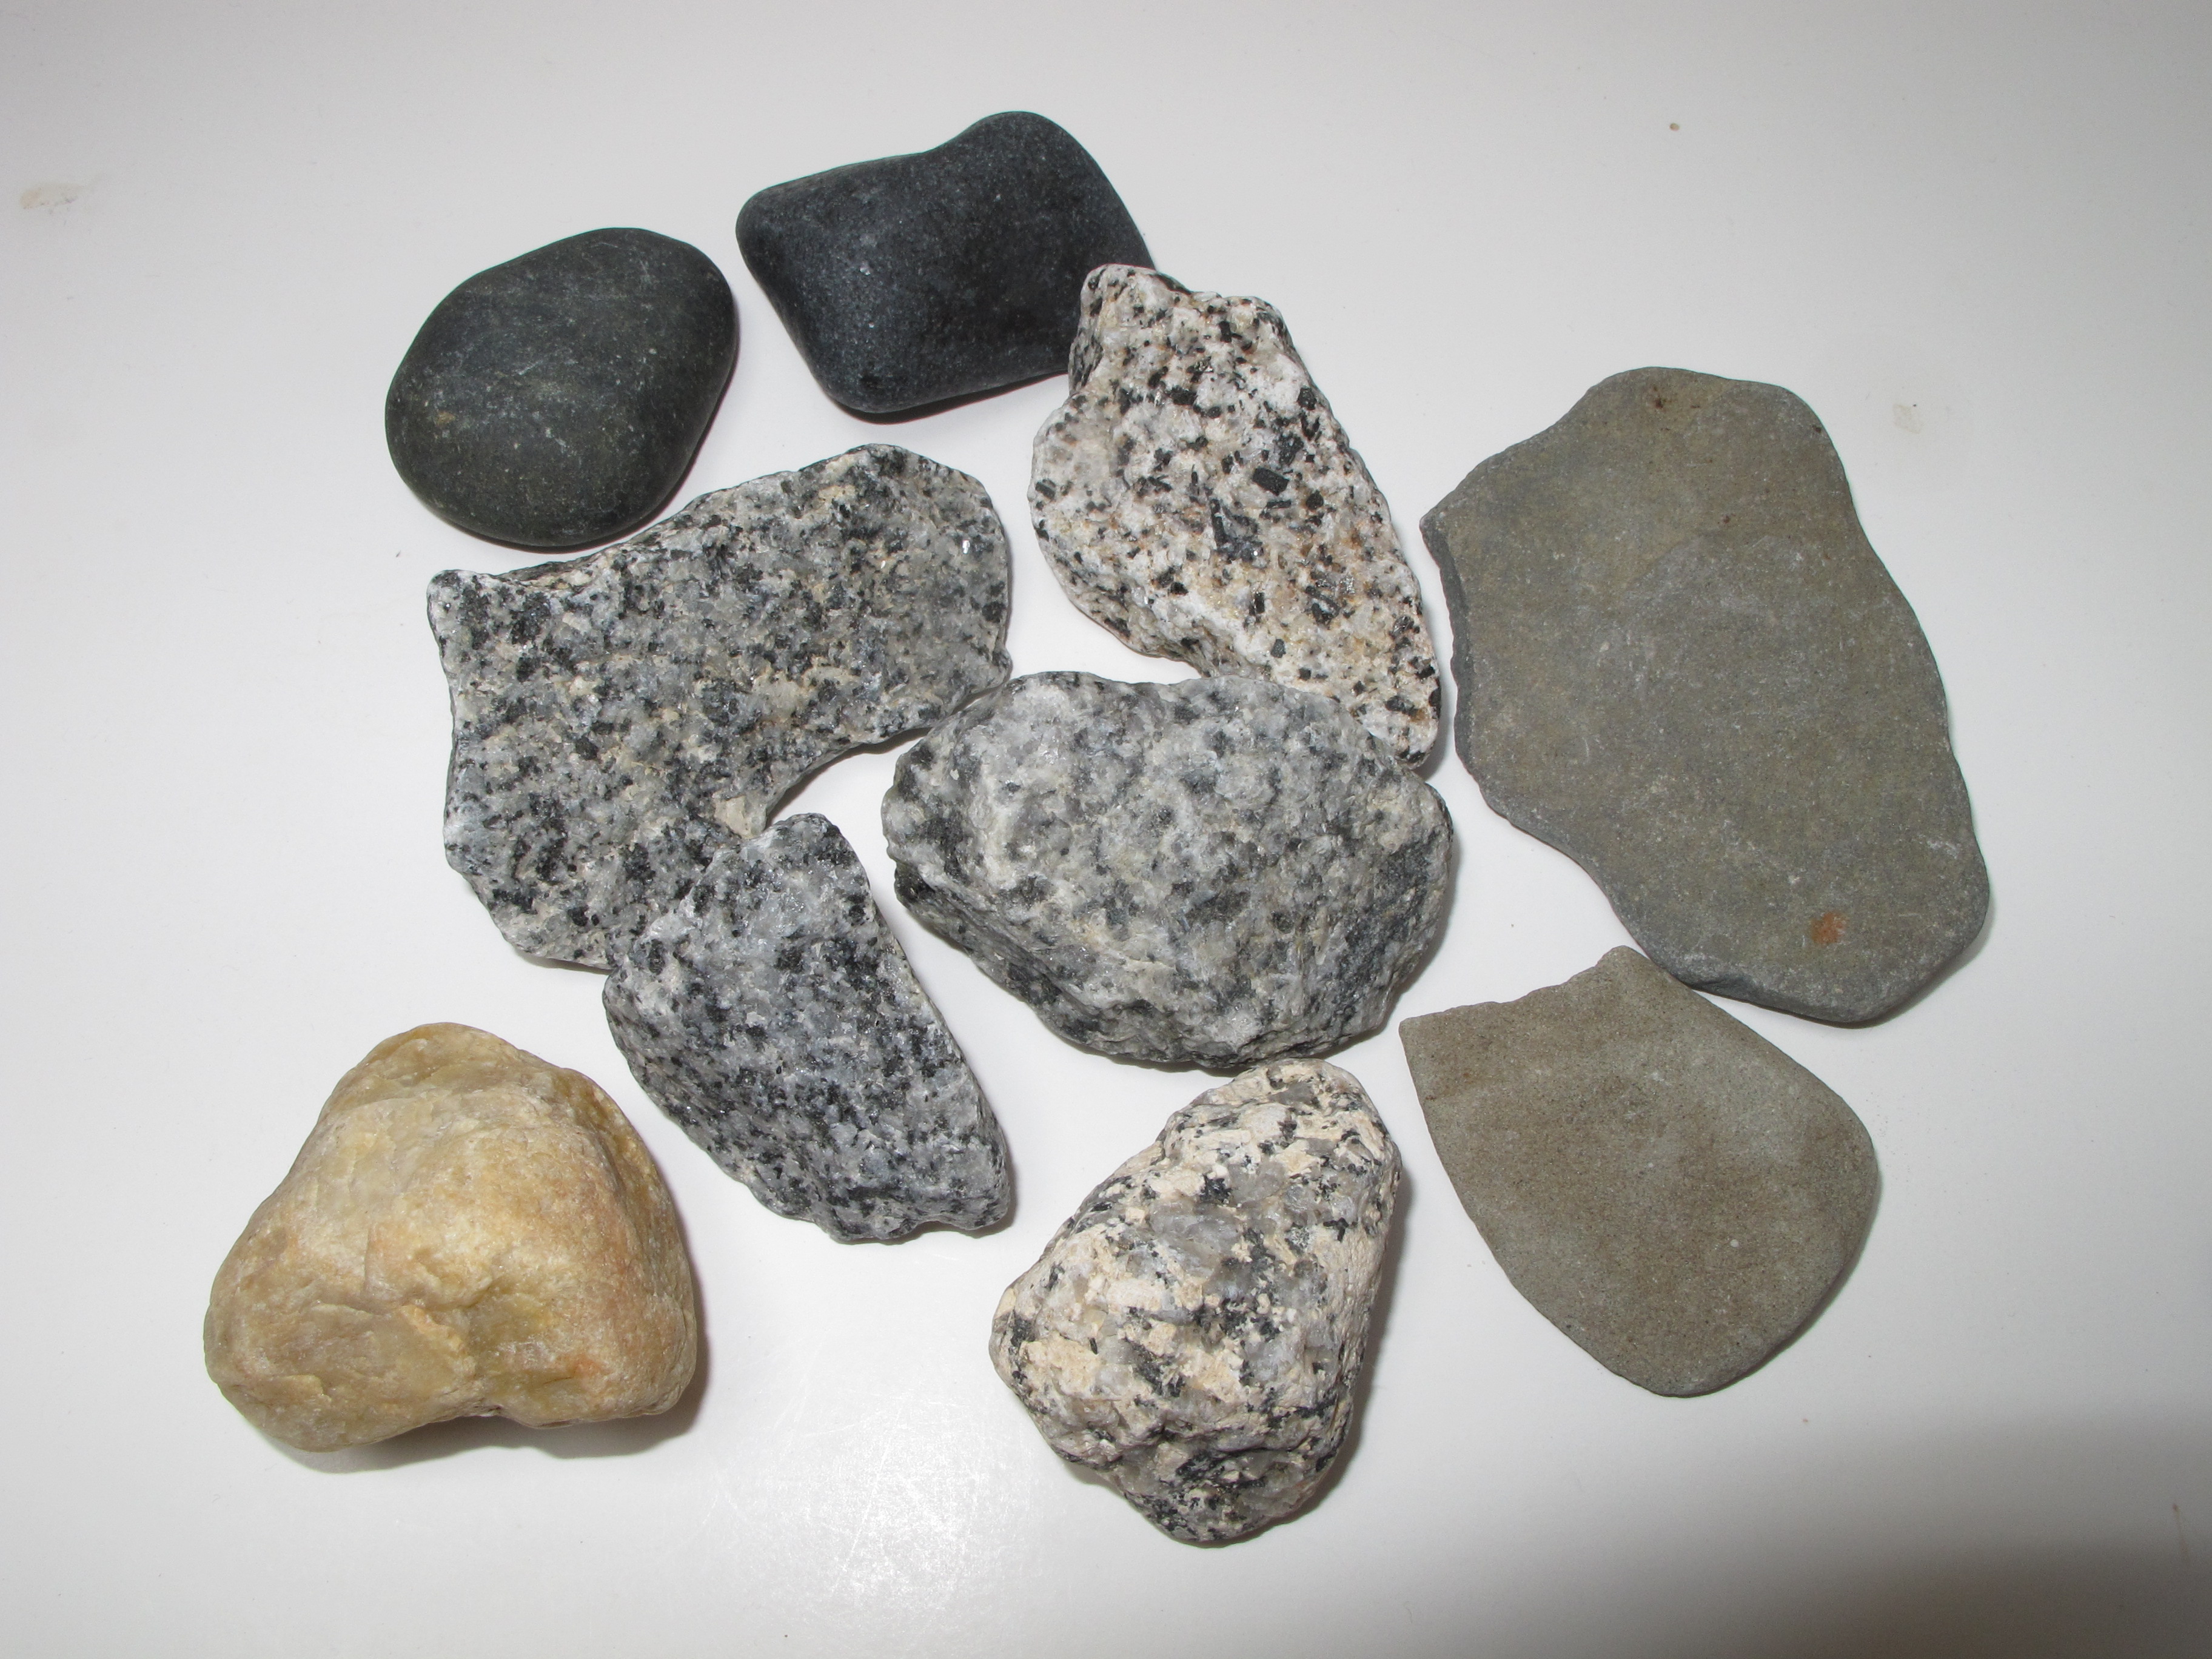 Grey Crushed Granite Pebbles, Background Image Royalty Free Stock Image Image 27482926